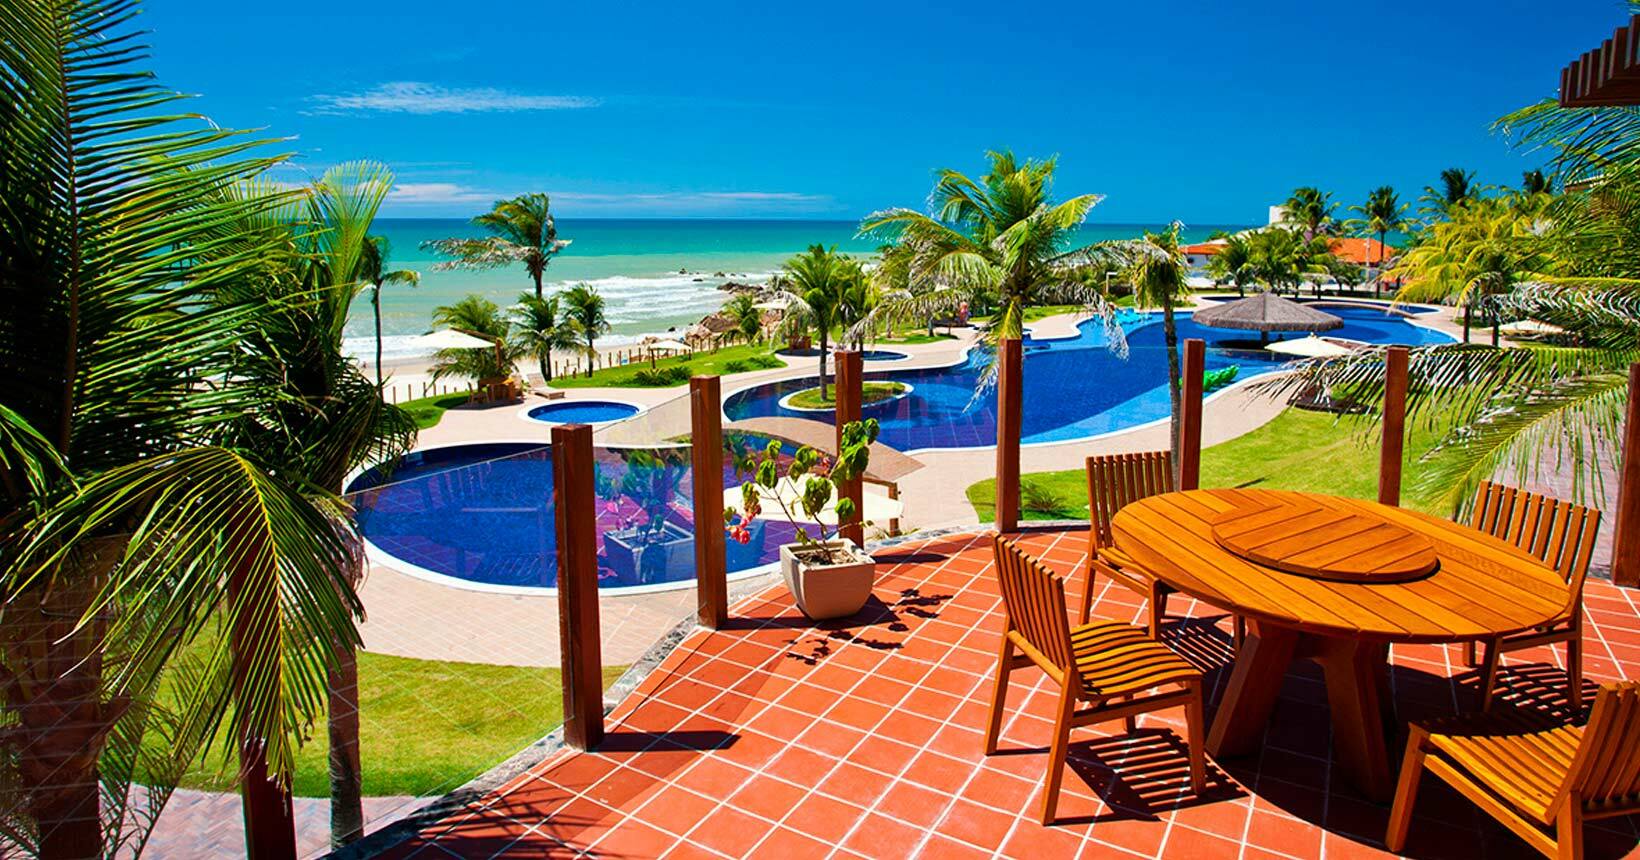 The best resorts in Brazil in May